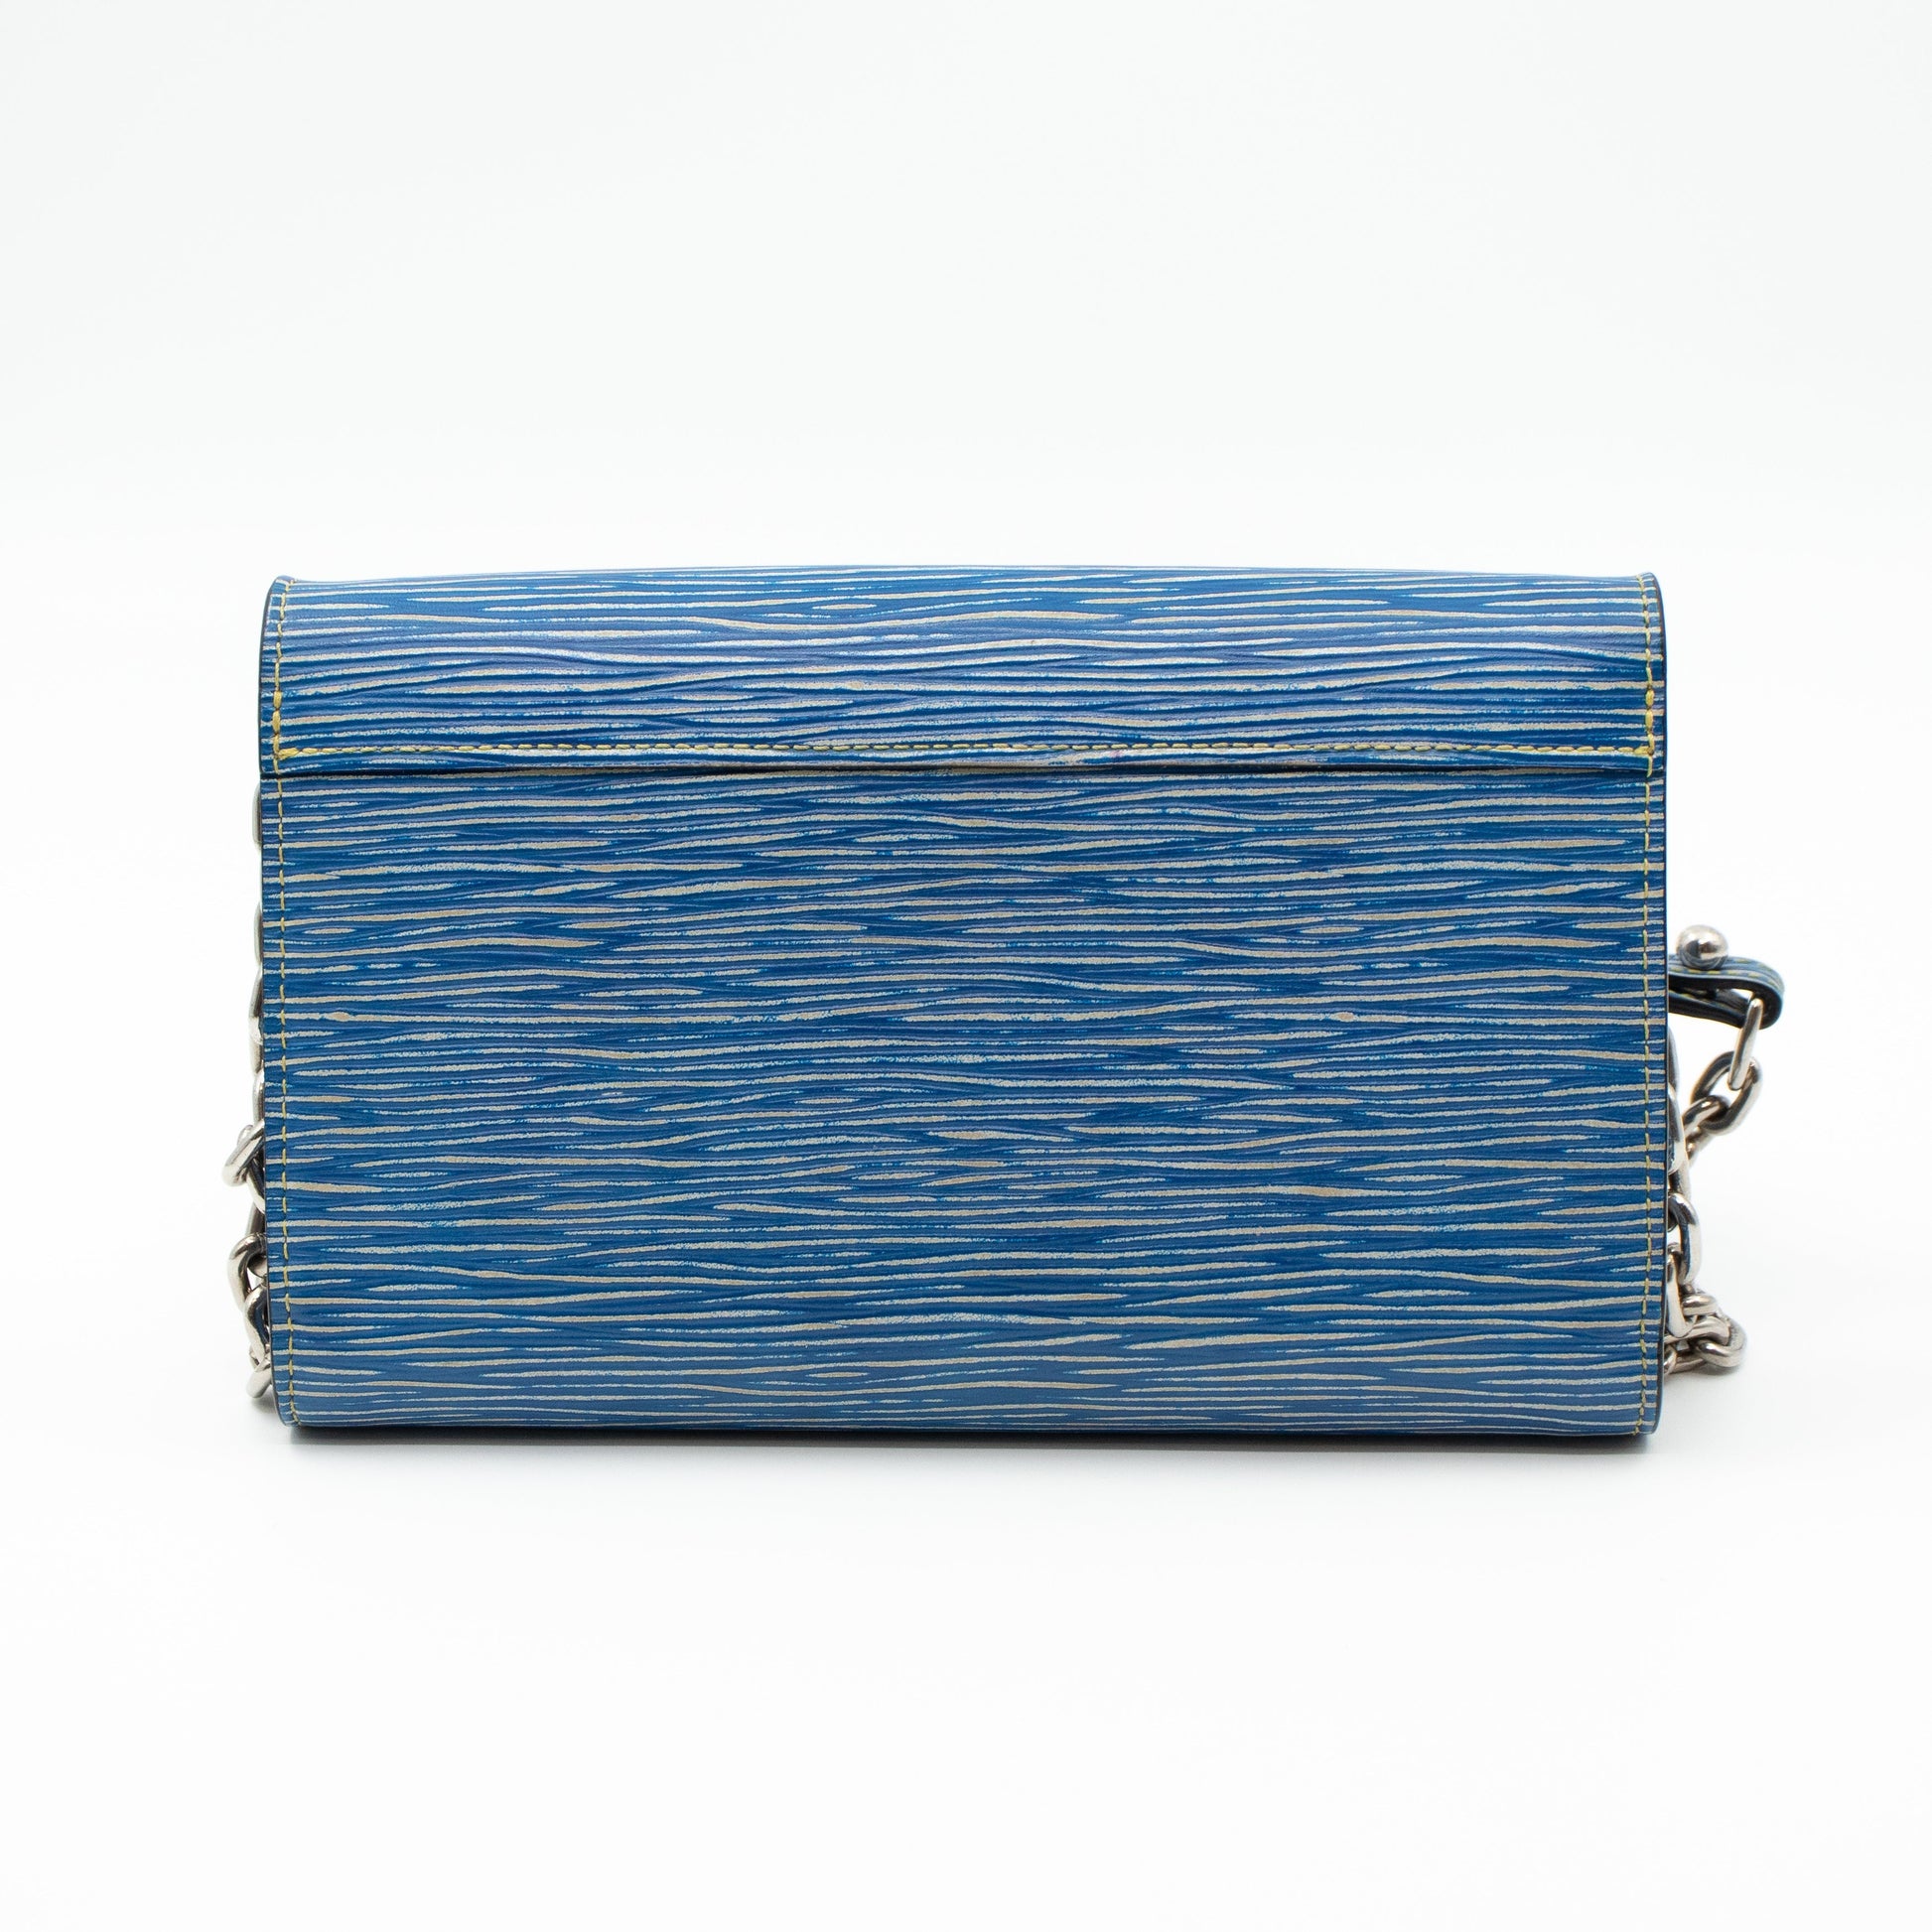 Shop Louis Vuitton EPI Twist wallet (M67510) by SkyNS